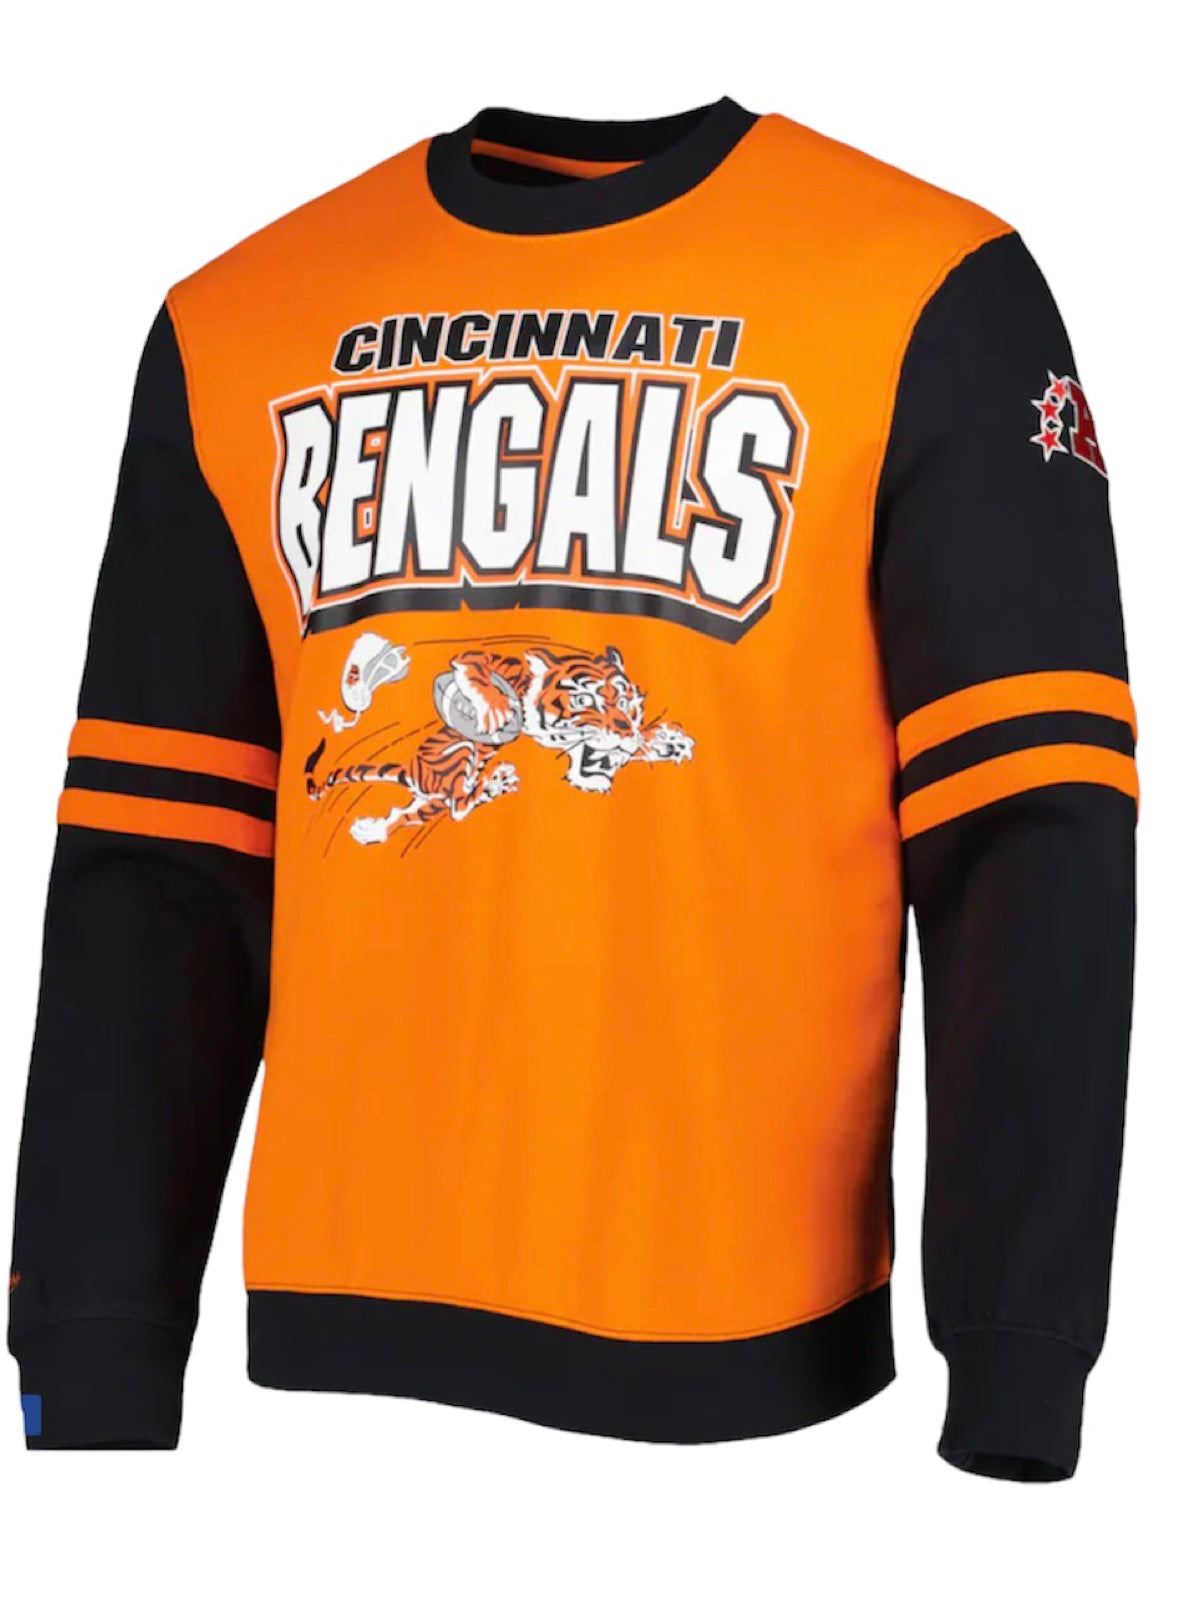 Mitchell & Ness Sweatshirt - All Over Crew 2.0 - Cincinnati Bengals - Orange and Black - FCPO3400 S